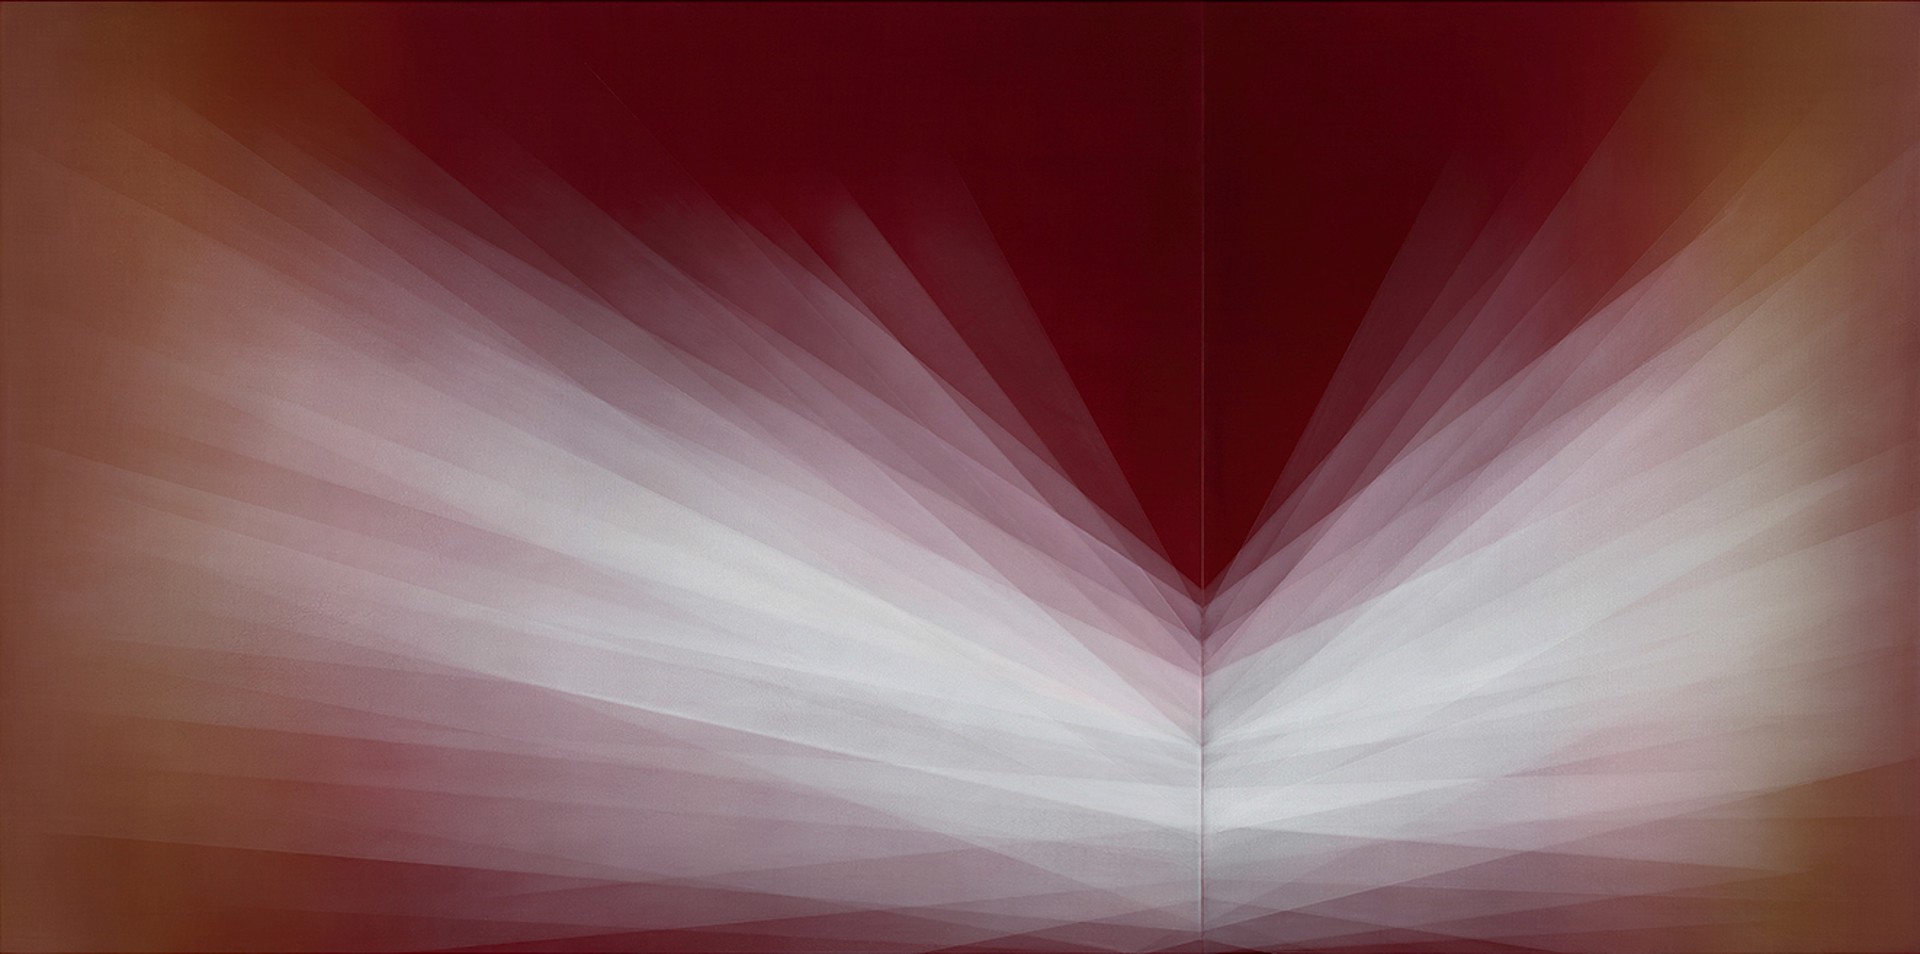 Refraction (Crimson) by Bernadette Jiyong Frank